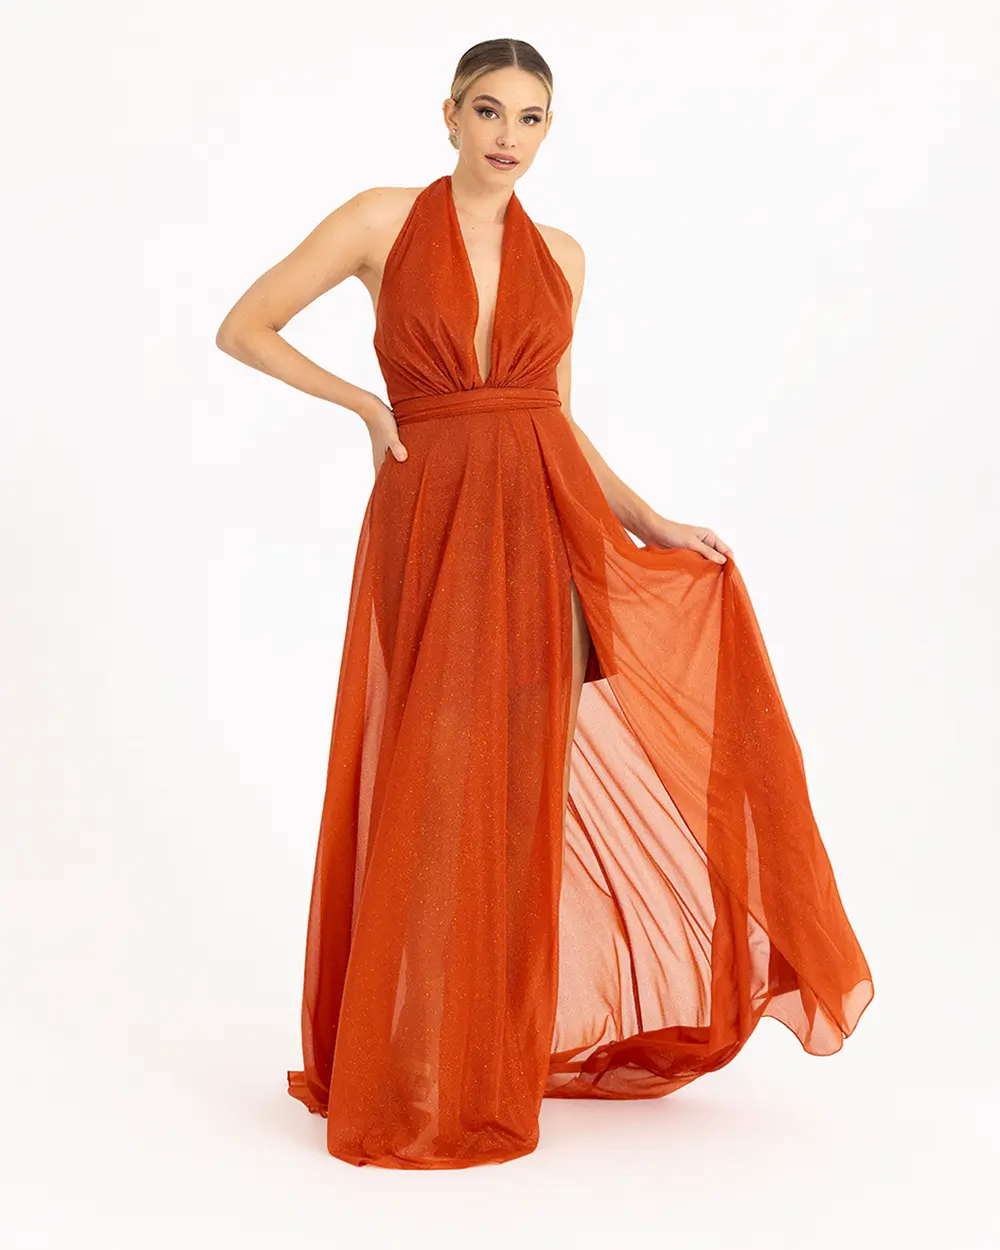 Shimmer Detailed Tulle Evening Dress